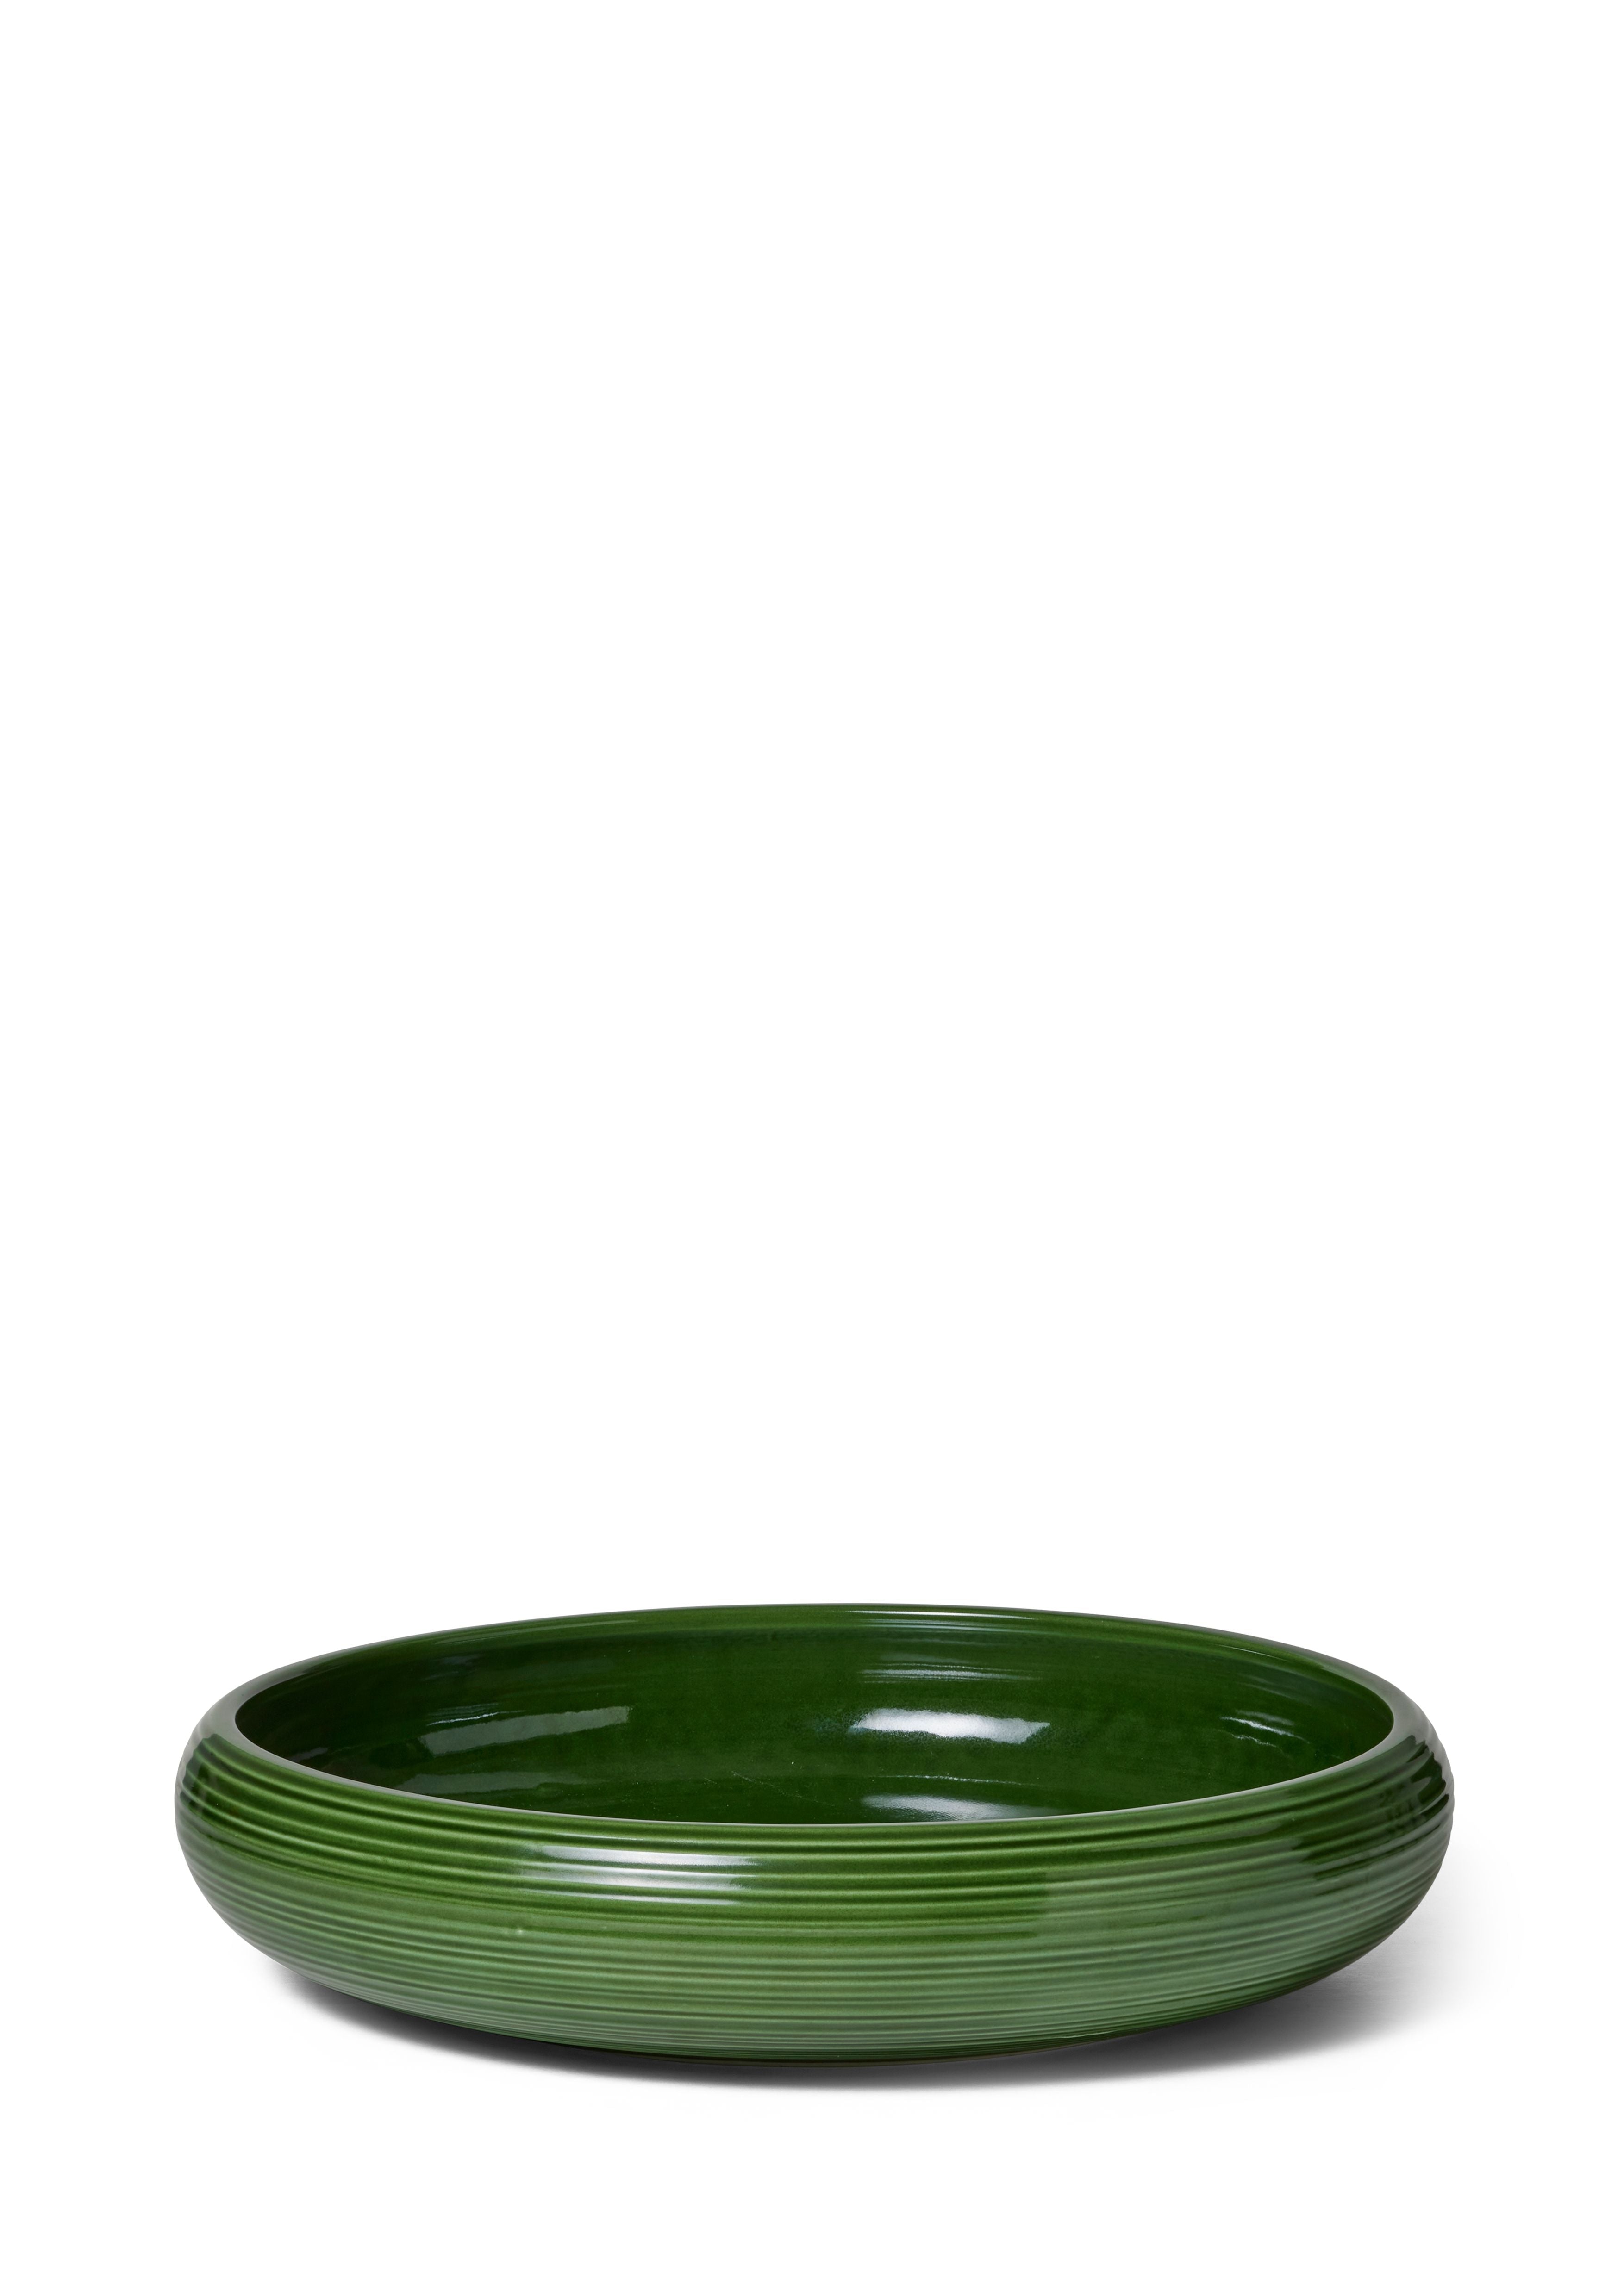 Kähler Color Bowl ø34 Cm, Green